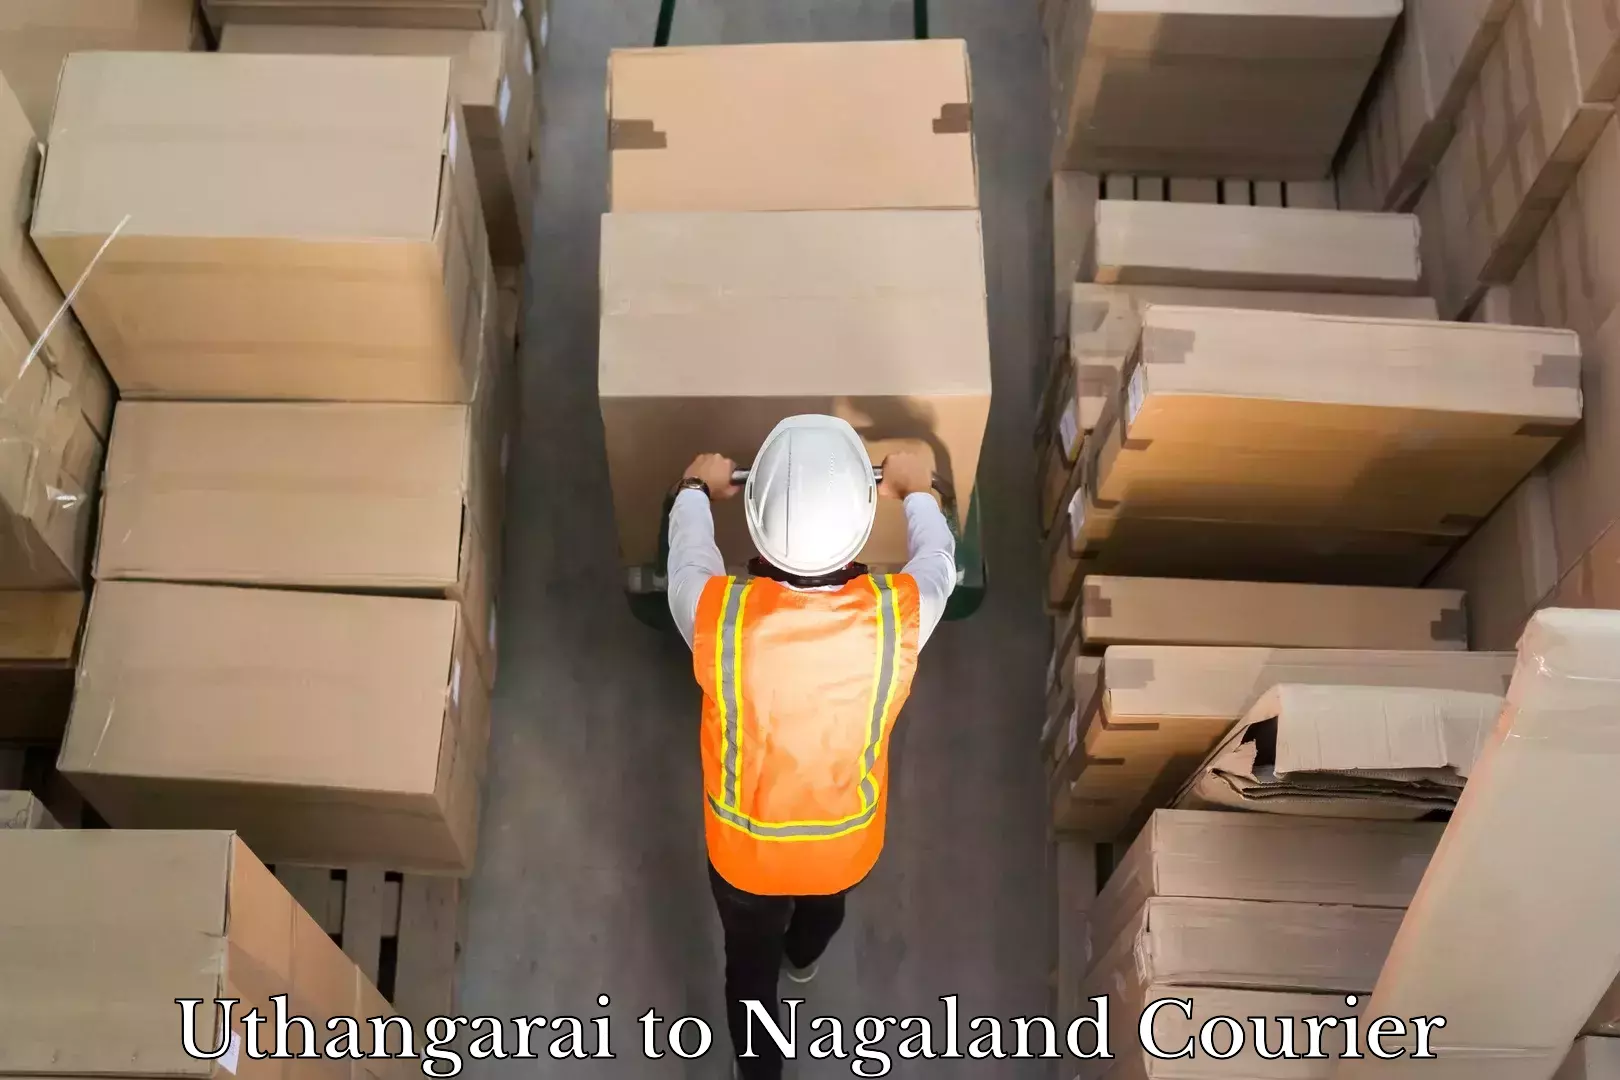 Courier service booking Uthangarai to Nagaland